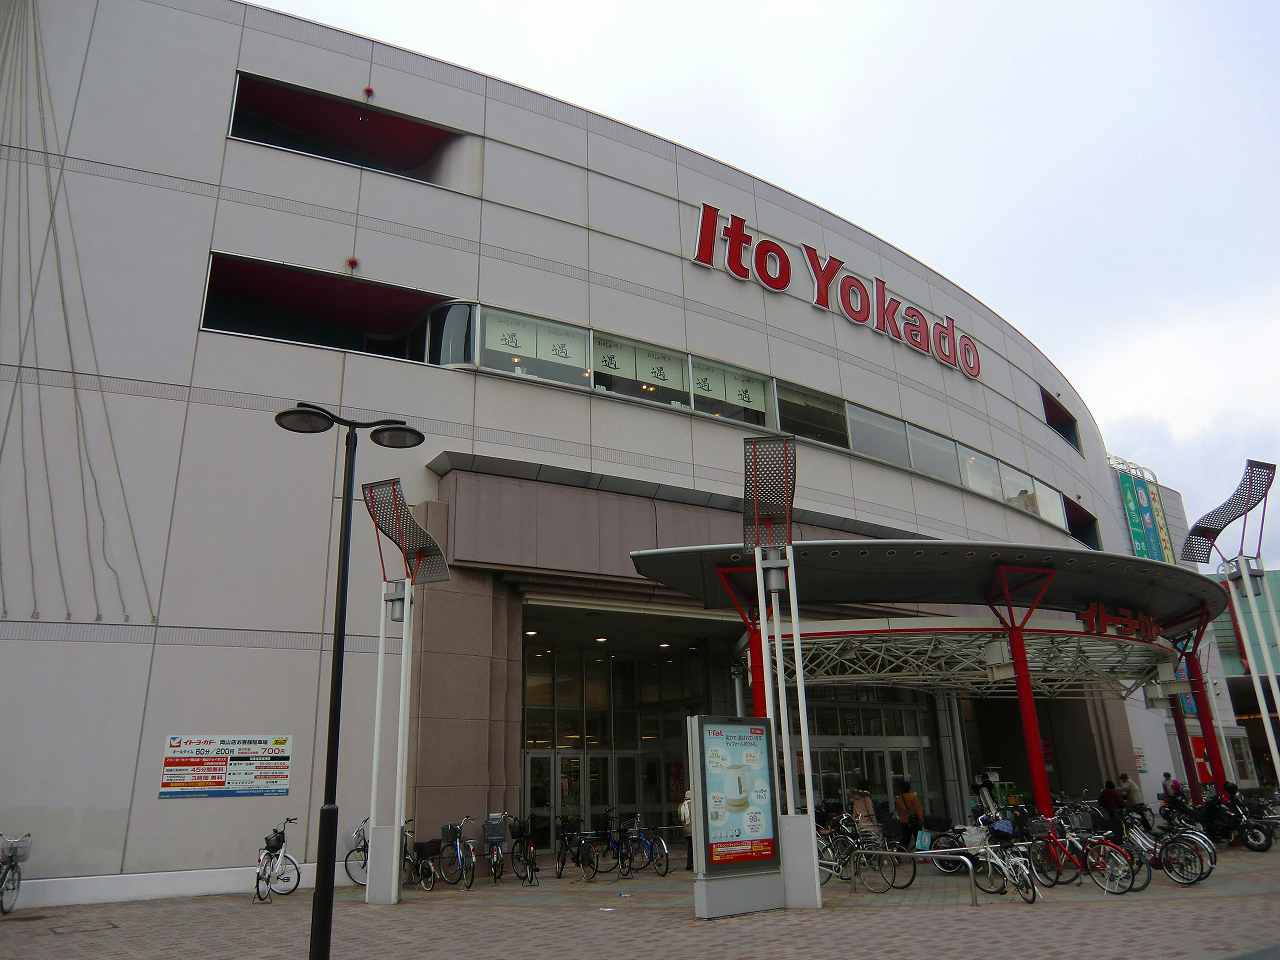 Supermarket. Ito-Yokado to (super) 1500m